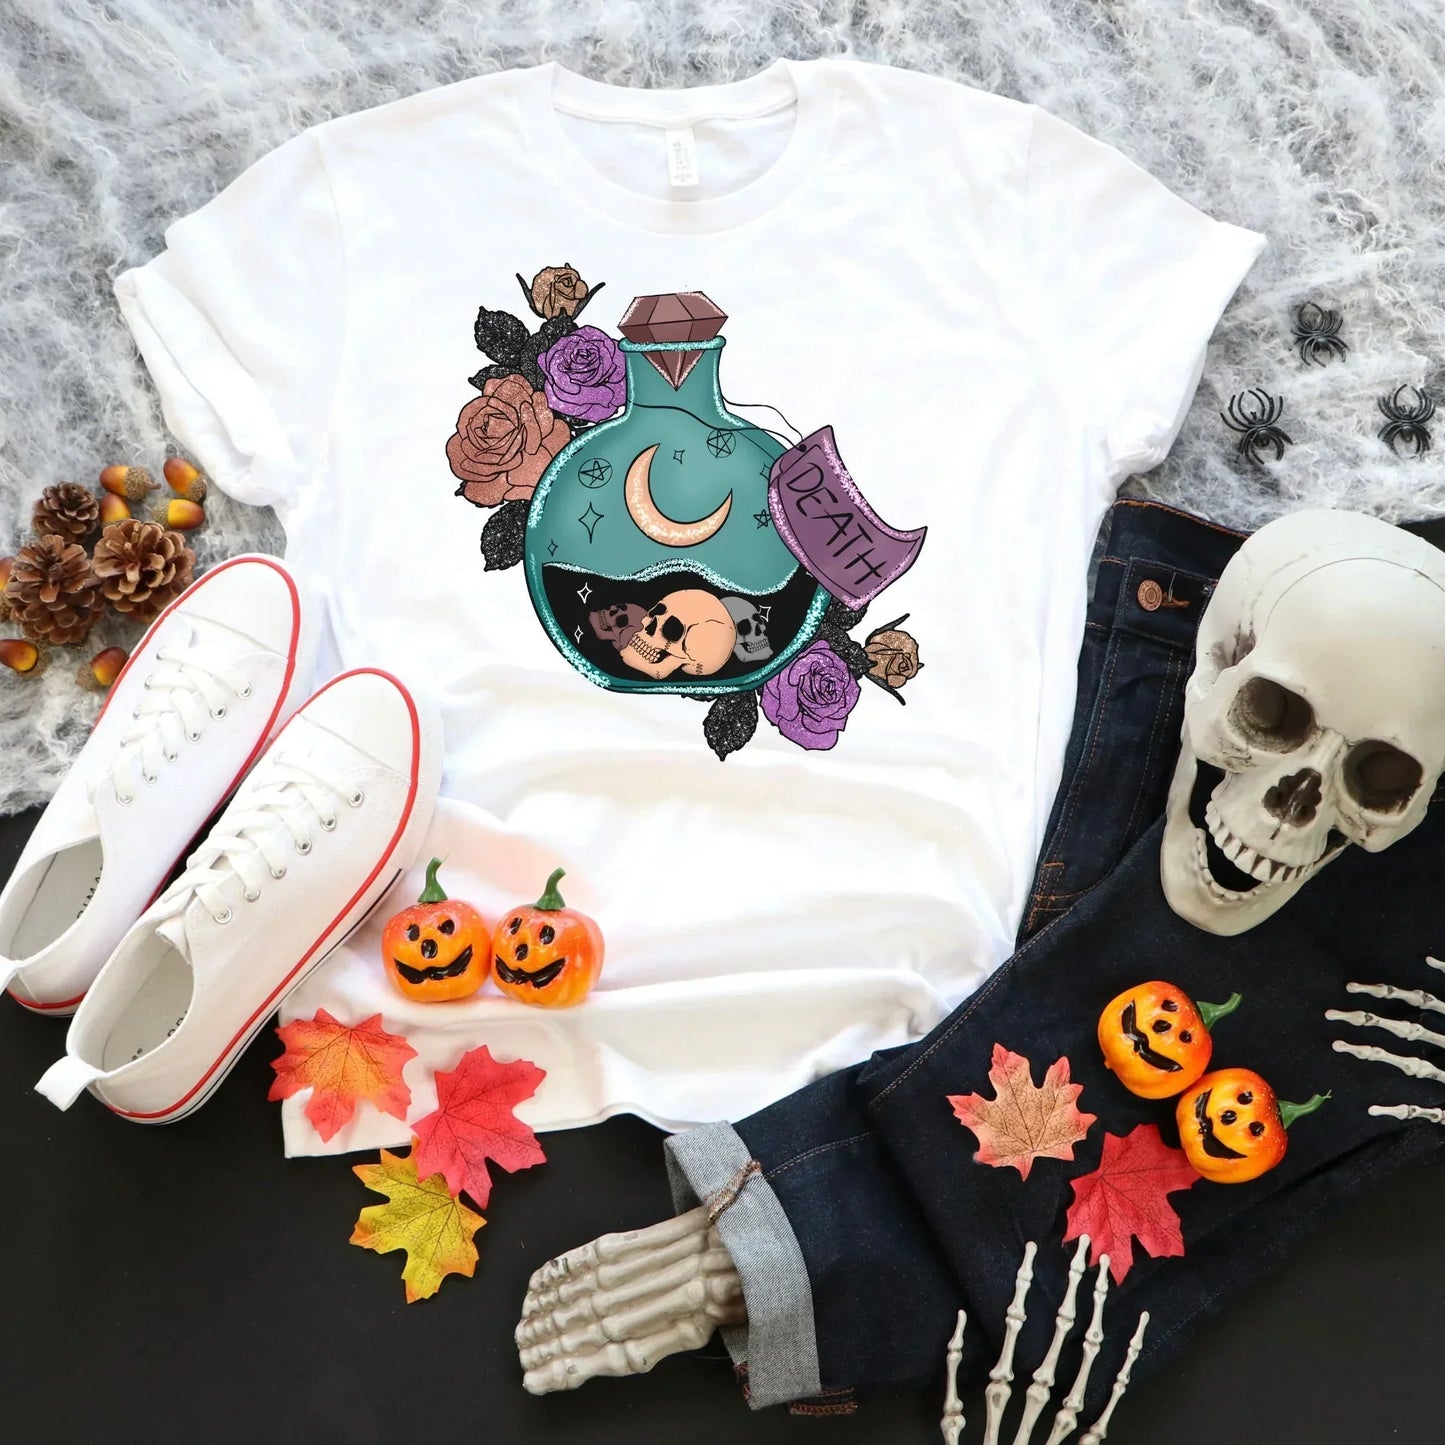 Pastel Halloween Shirt, Gothic Shirt, Witchy Vibes Sweatshirt, Skull Shirt, Pastel Goth Style Grunge Shirt, Aesthetic Clothing, Witch Tee